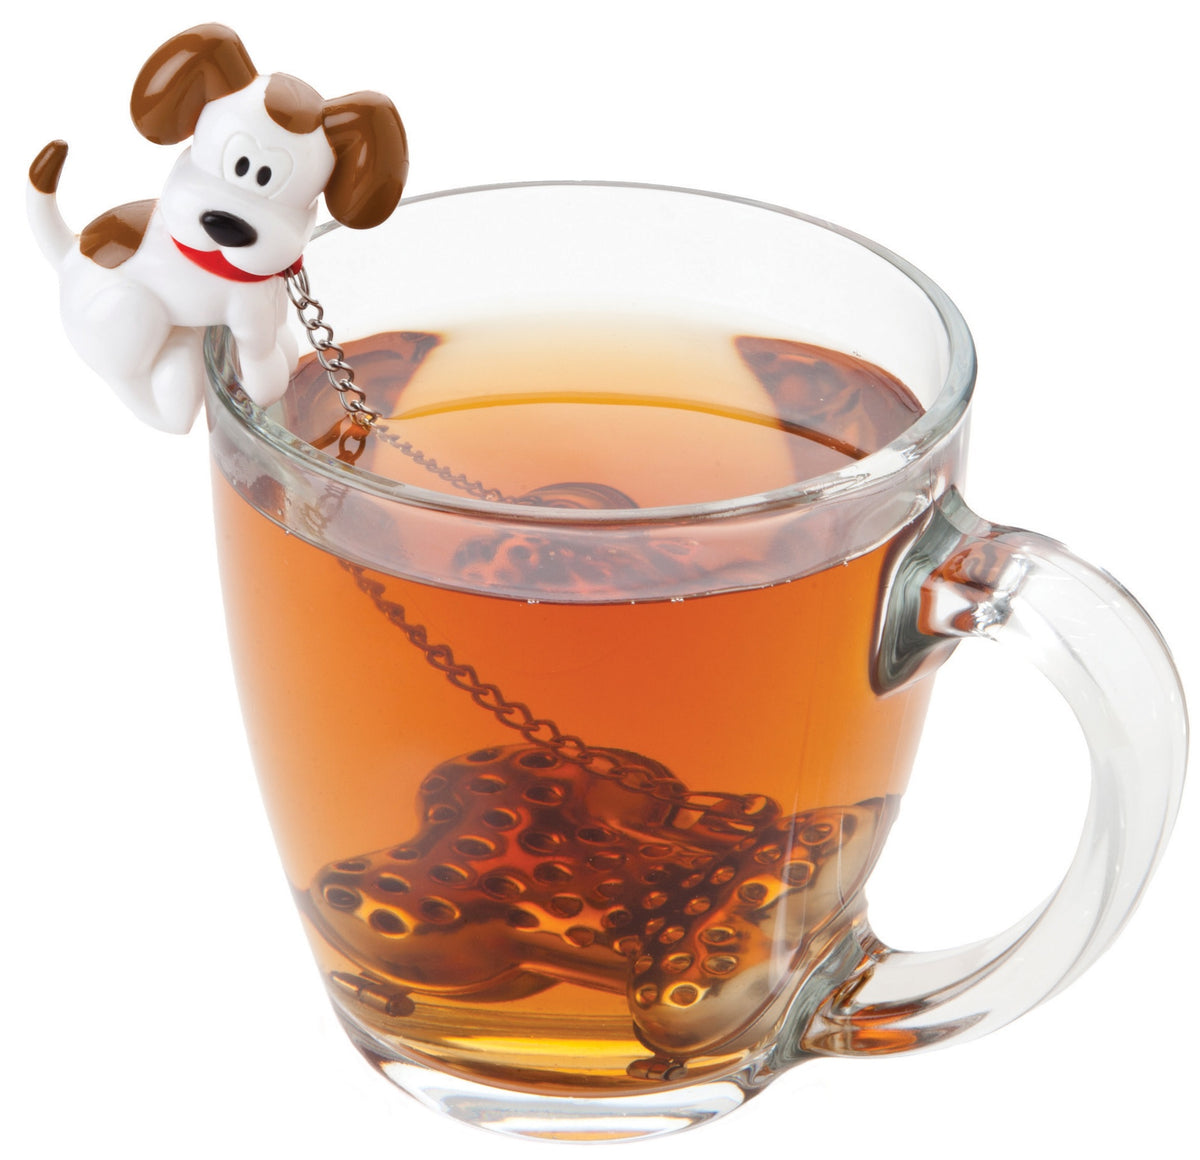 Joie MSC 10051 Woof Tea Cup Infuser